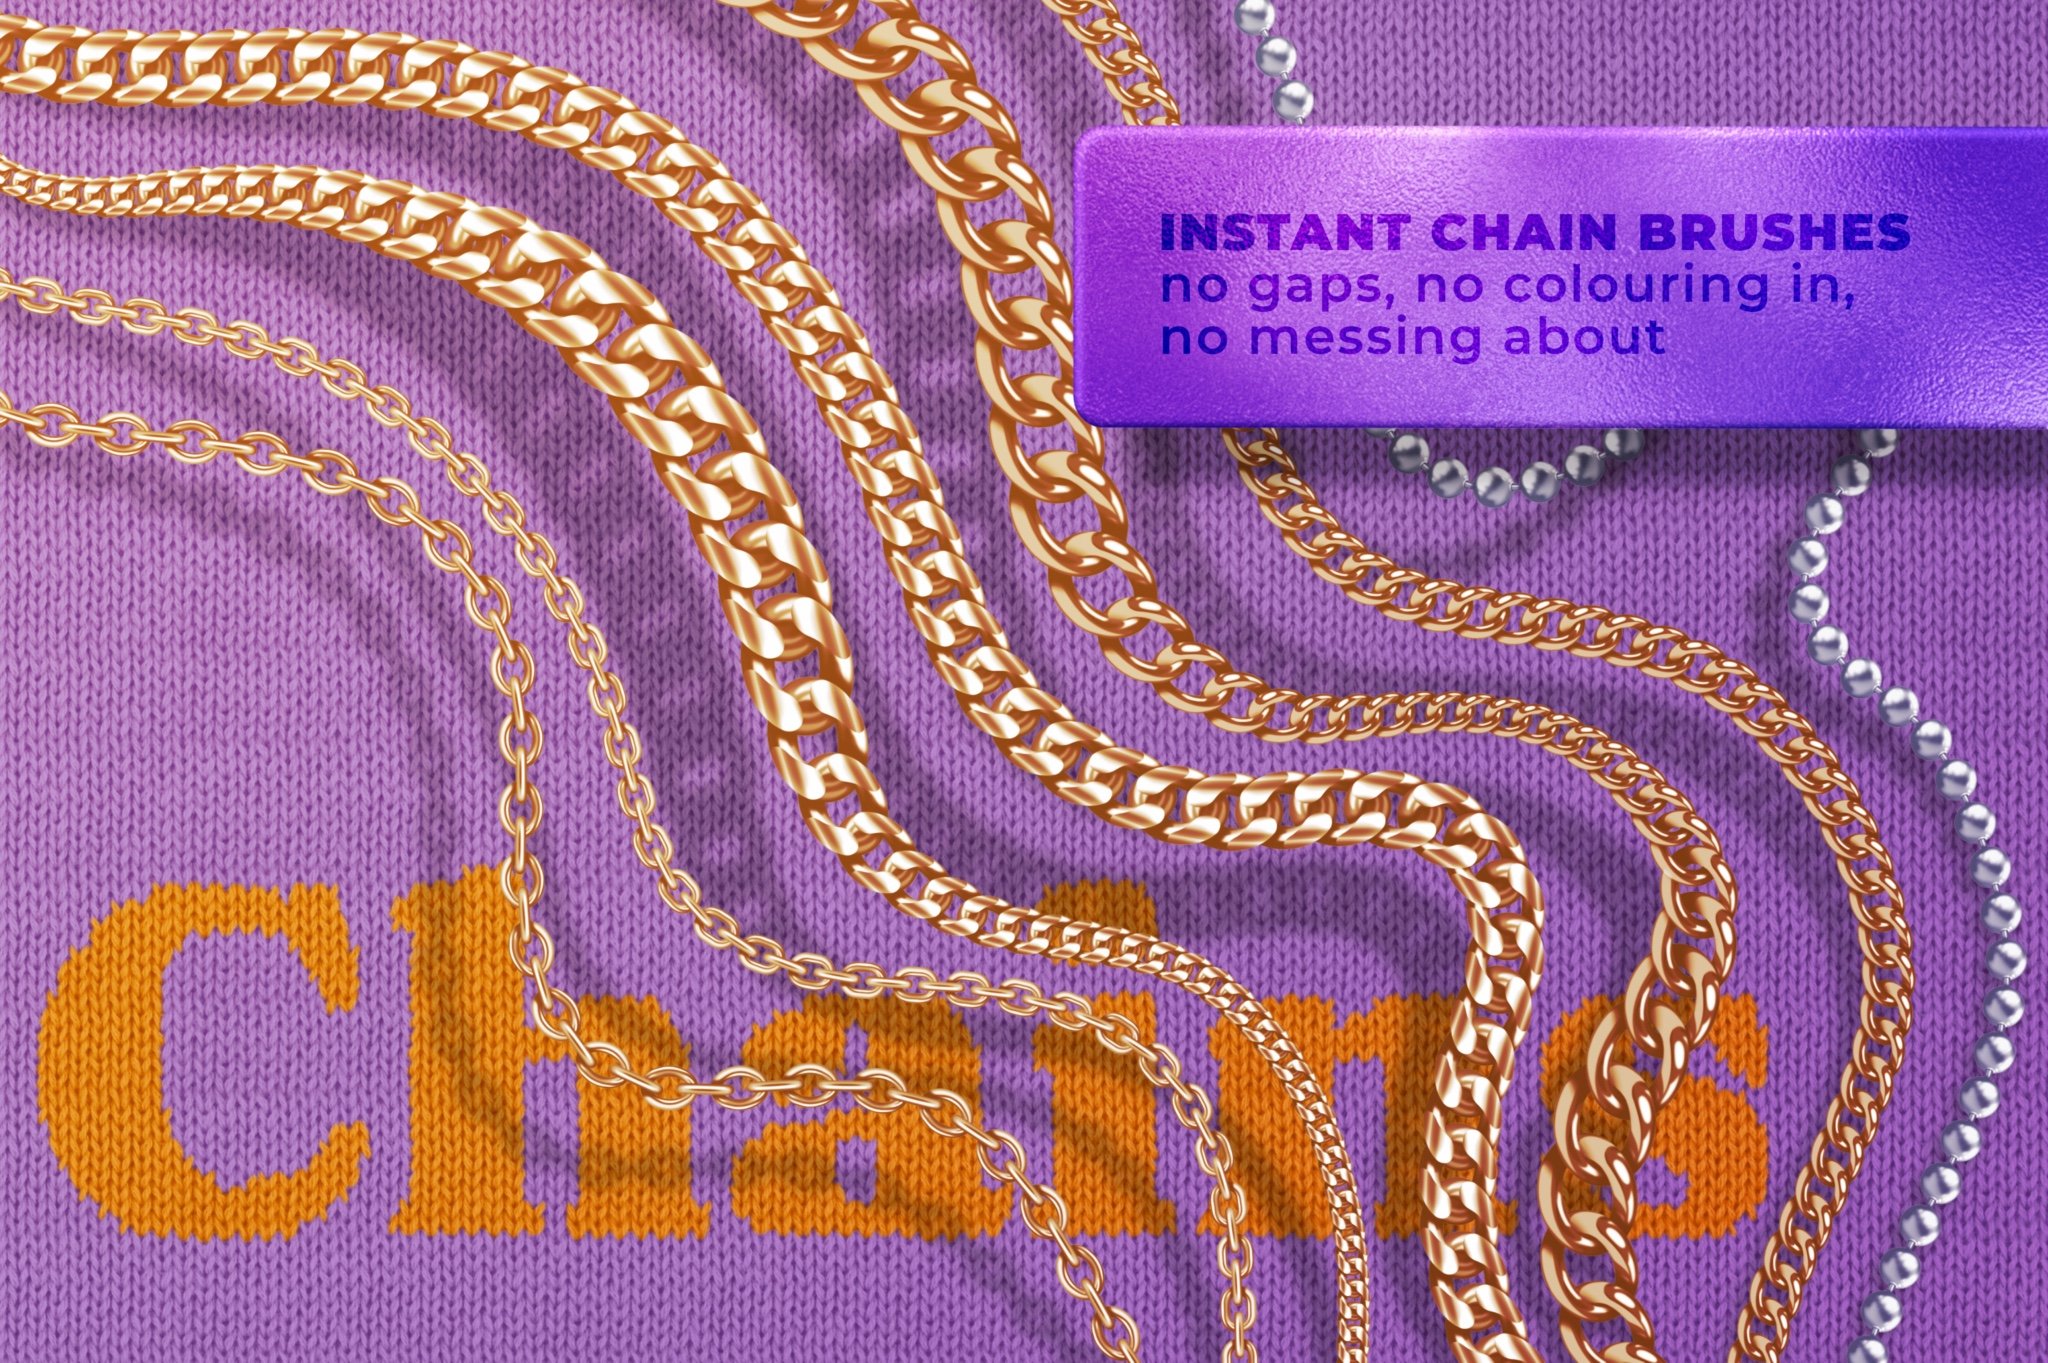 Gold chains on a purple backgrpund.